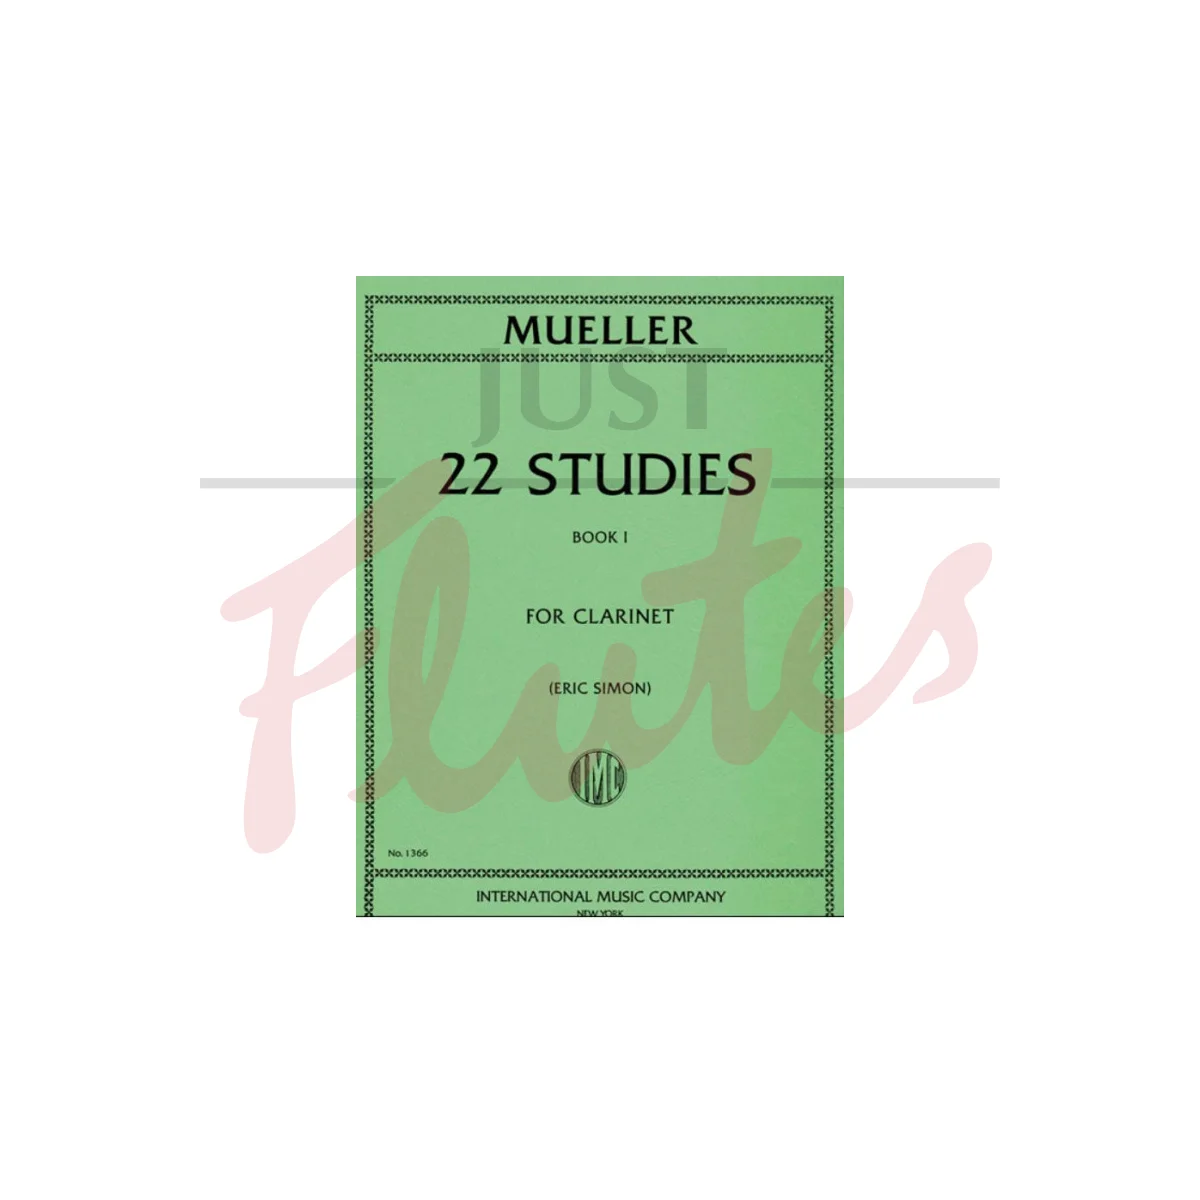 22 Studies for Clarinet, Vol. 1